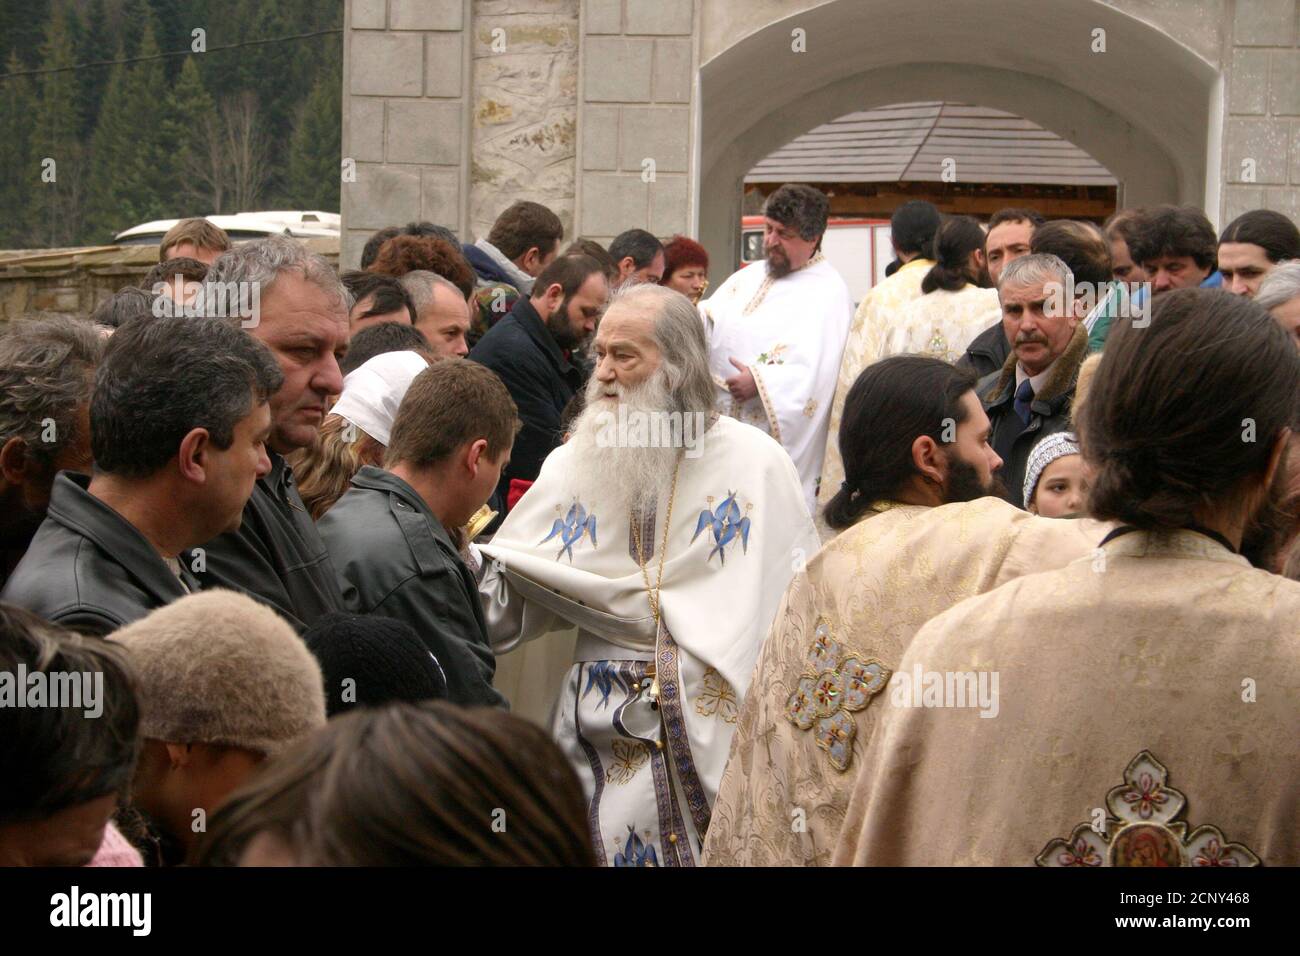 Petru Voda Christian Orthodox Monastery, Neamt County, Romania, 2008. Father Iustin Parvu and believers during a religious service. Stock Photo